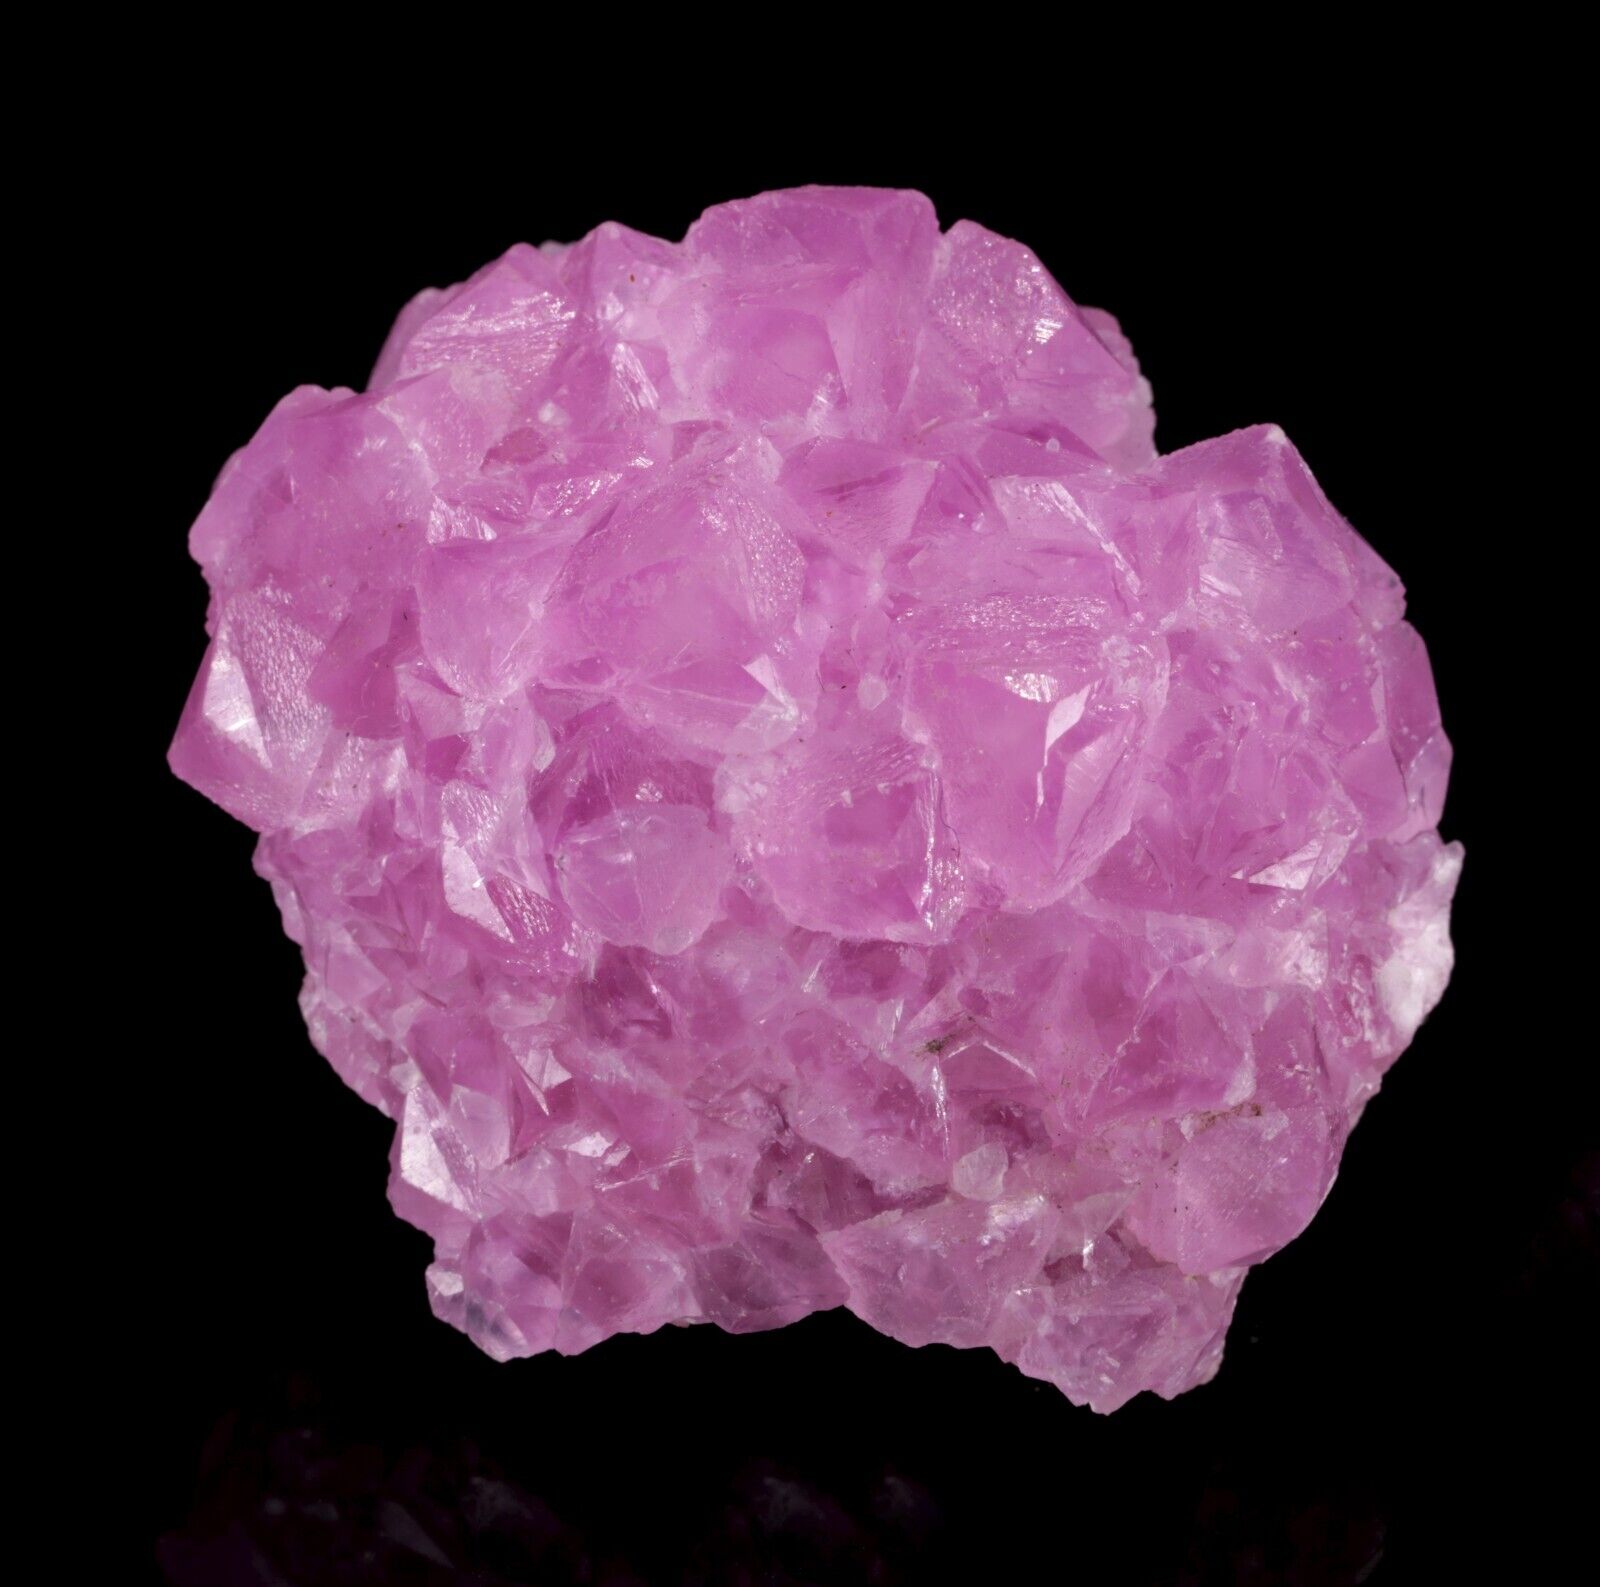 Neon Pink Cobaltoan Calcite Mini from Bou Azzer Morocco